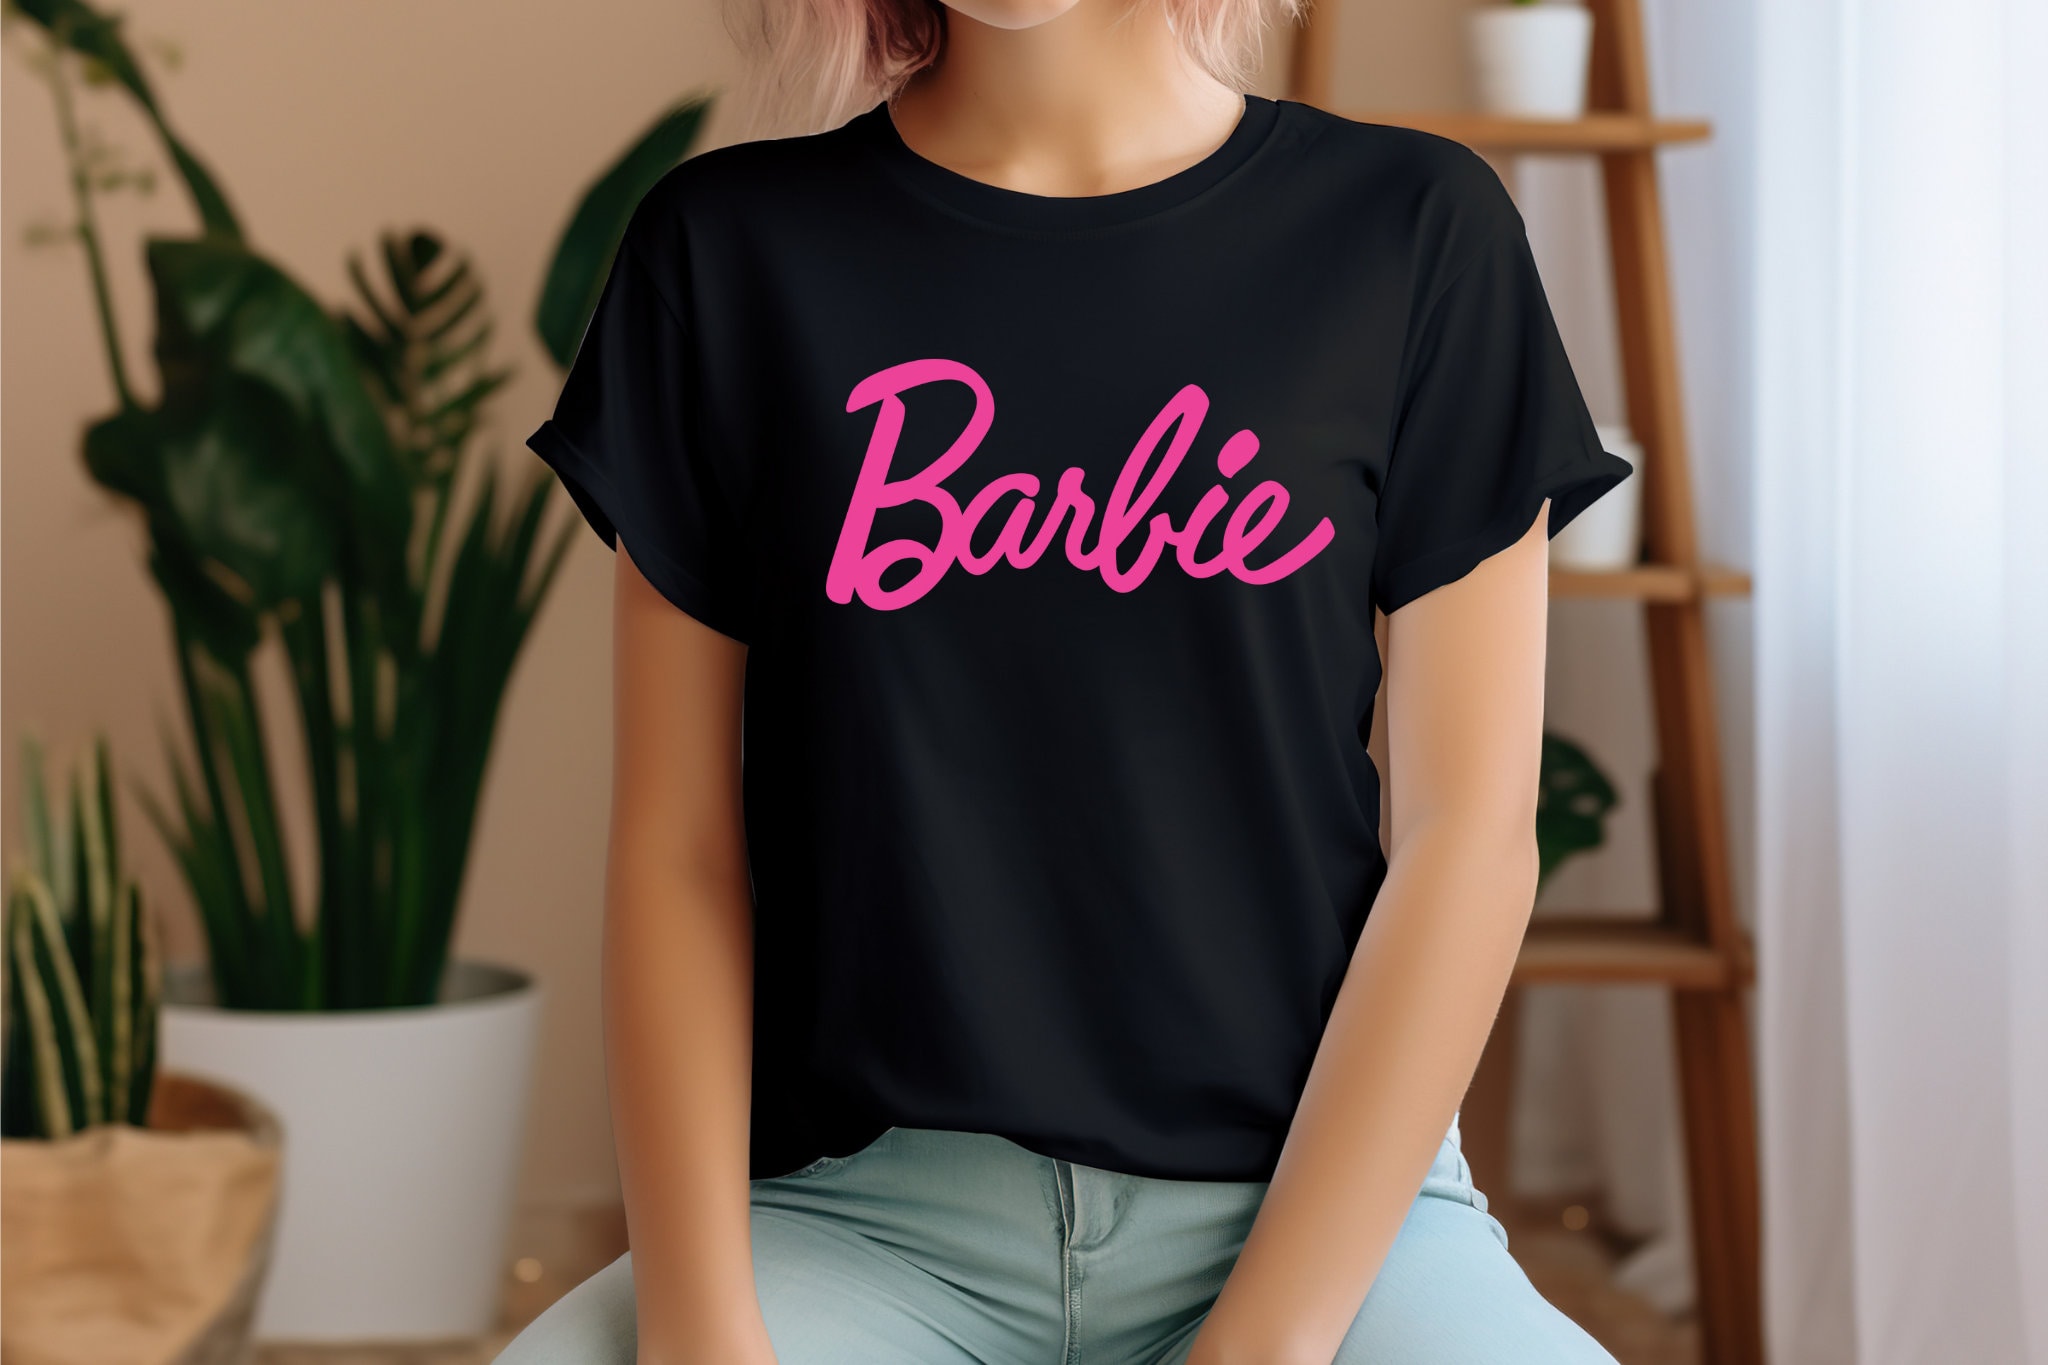 Barbie T-Shirt Damen, T Shirts Damen Sommer, Baumwolle Tshirt Damen